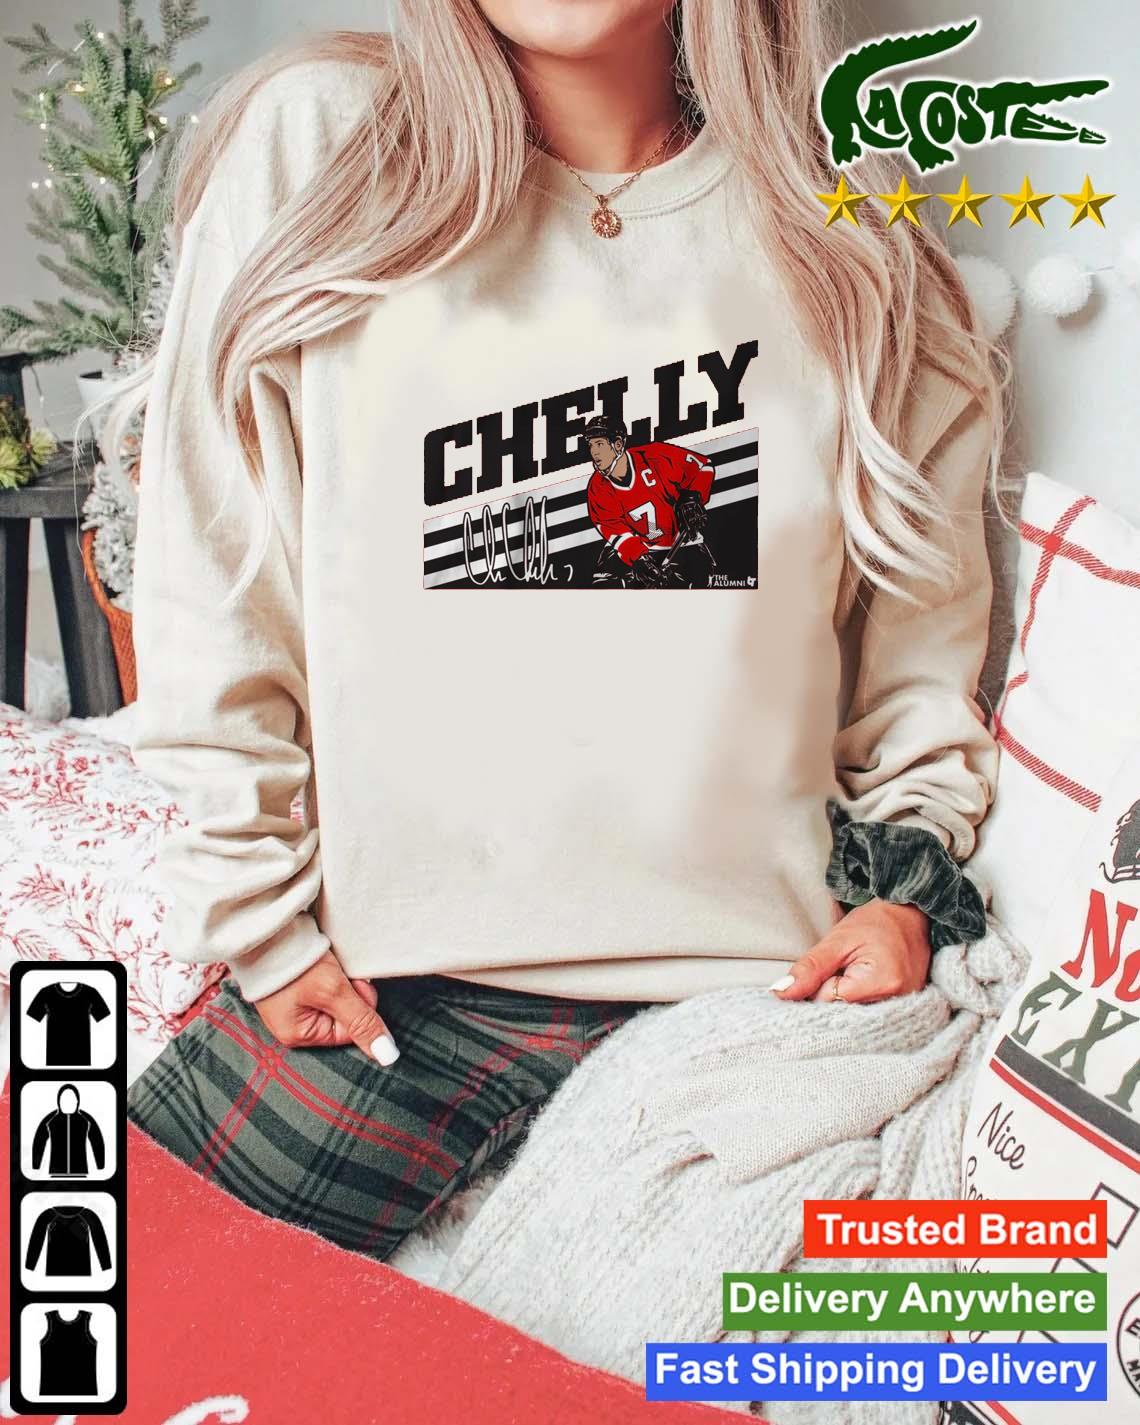 Chris Chelios Chelly Signature Sweats Mockup Sweater